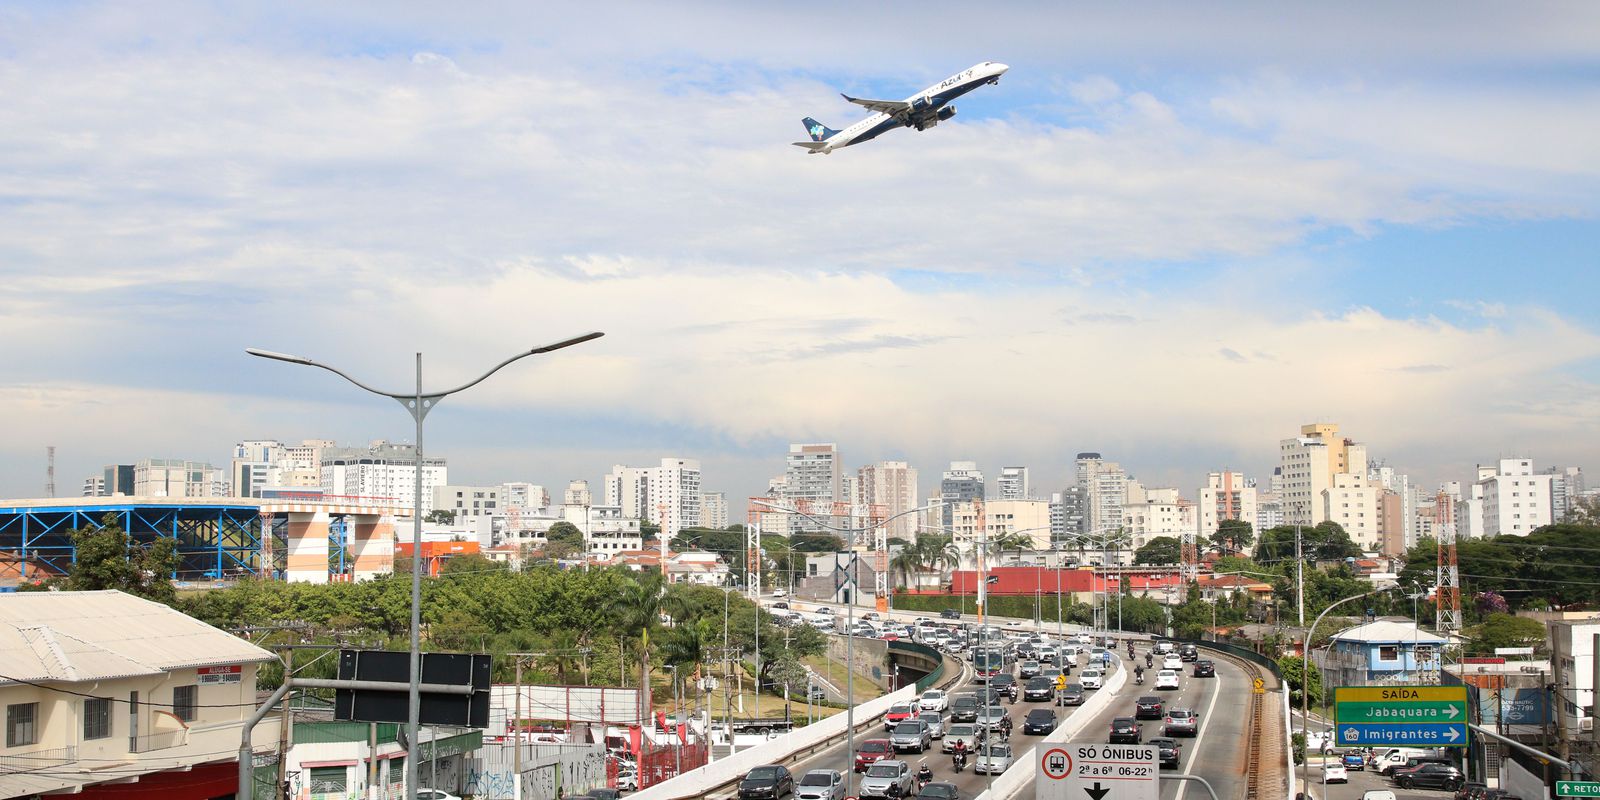 Demanda por voos domésticos tem queda de 2,5% no Brasil